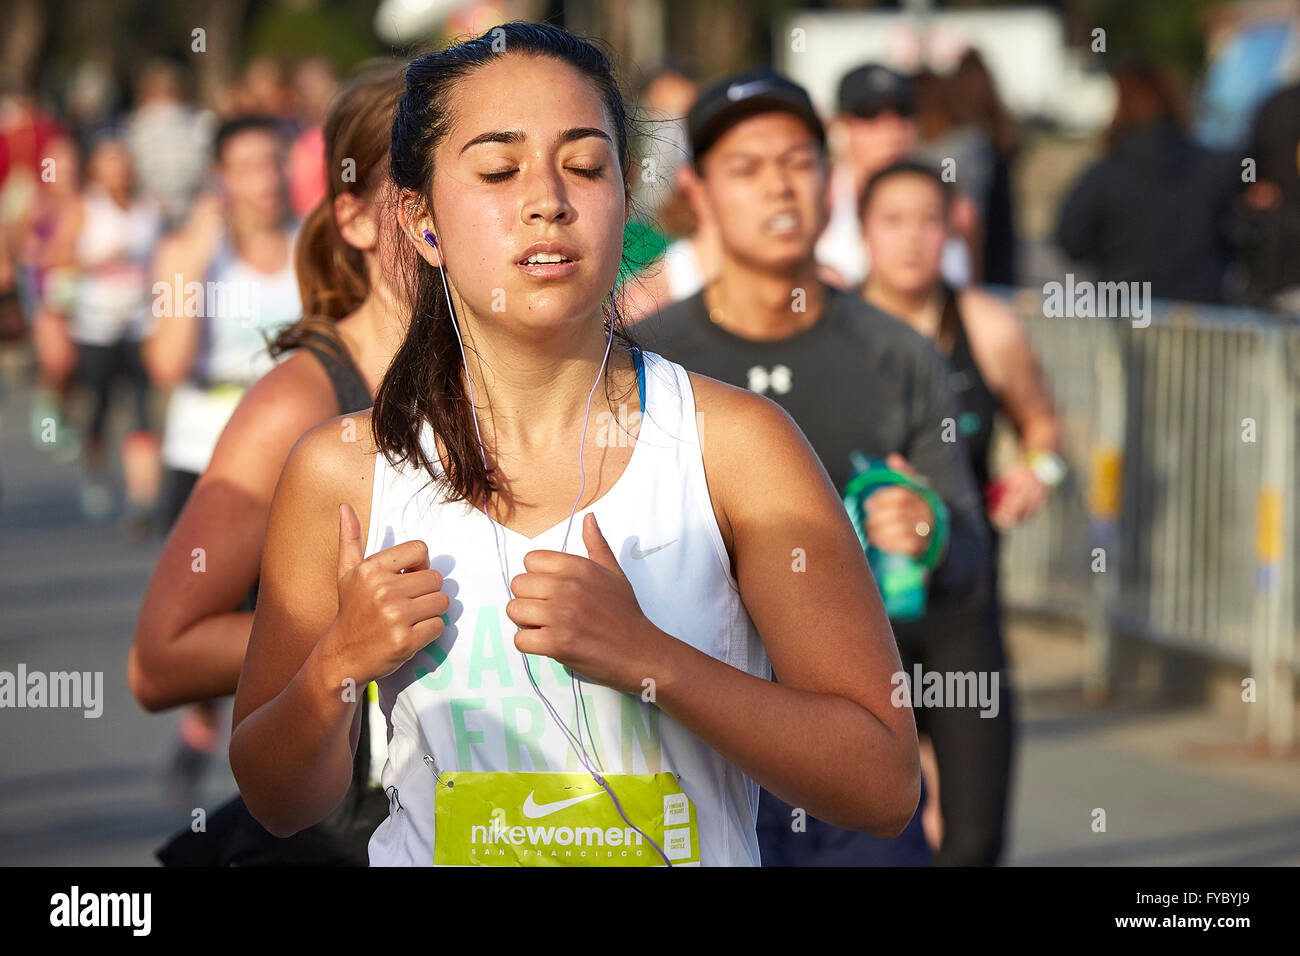 Female Athlete Approaching The Finish Line In The Nike Woman's Half Marathon, San Francisco, 2015. Stock Photo